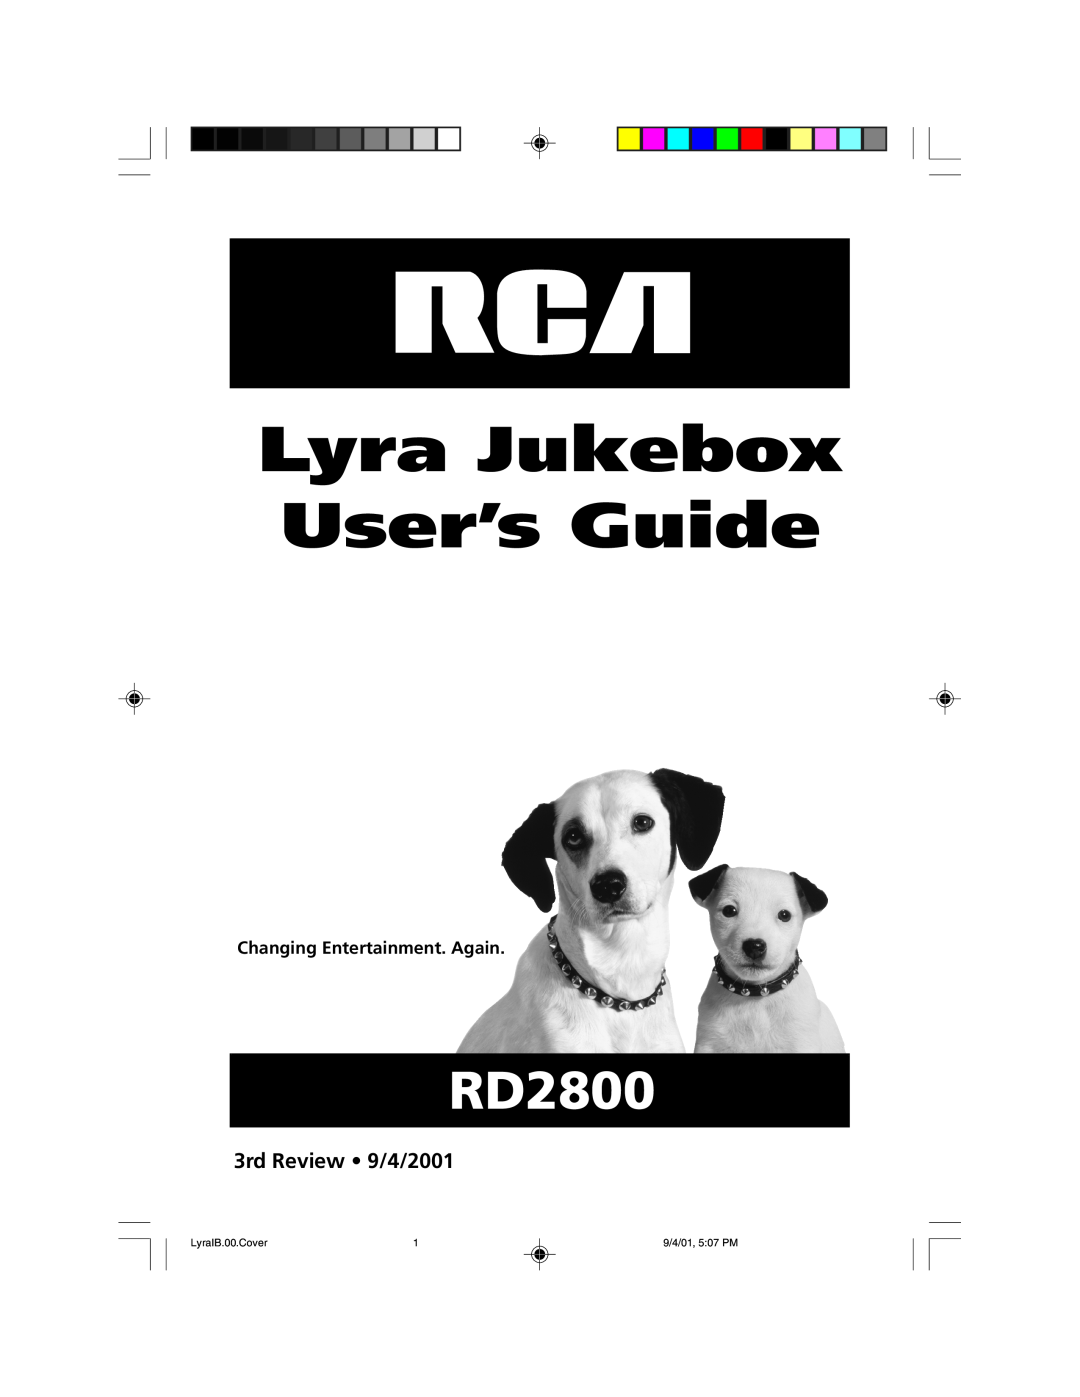 RCA RD2800 manual 3rd Review 9/4/2001, Changing Entertainment. Again, Lyra Jukebox User’s Guide, LyraIB.00.Cover 